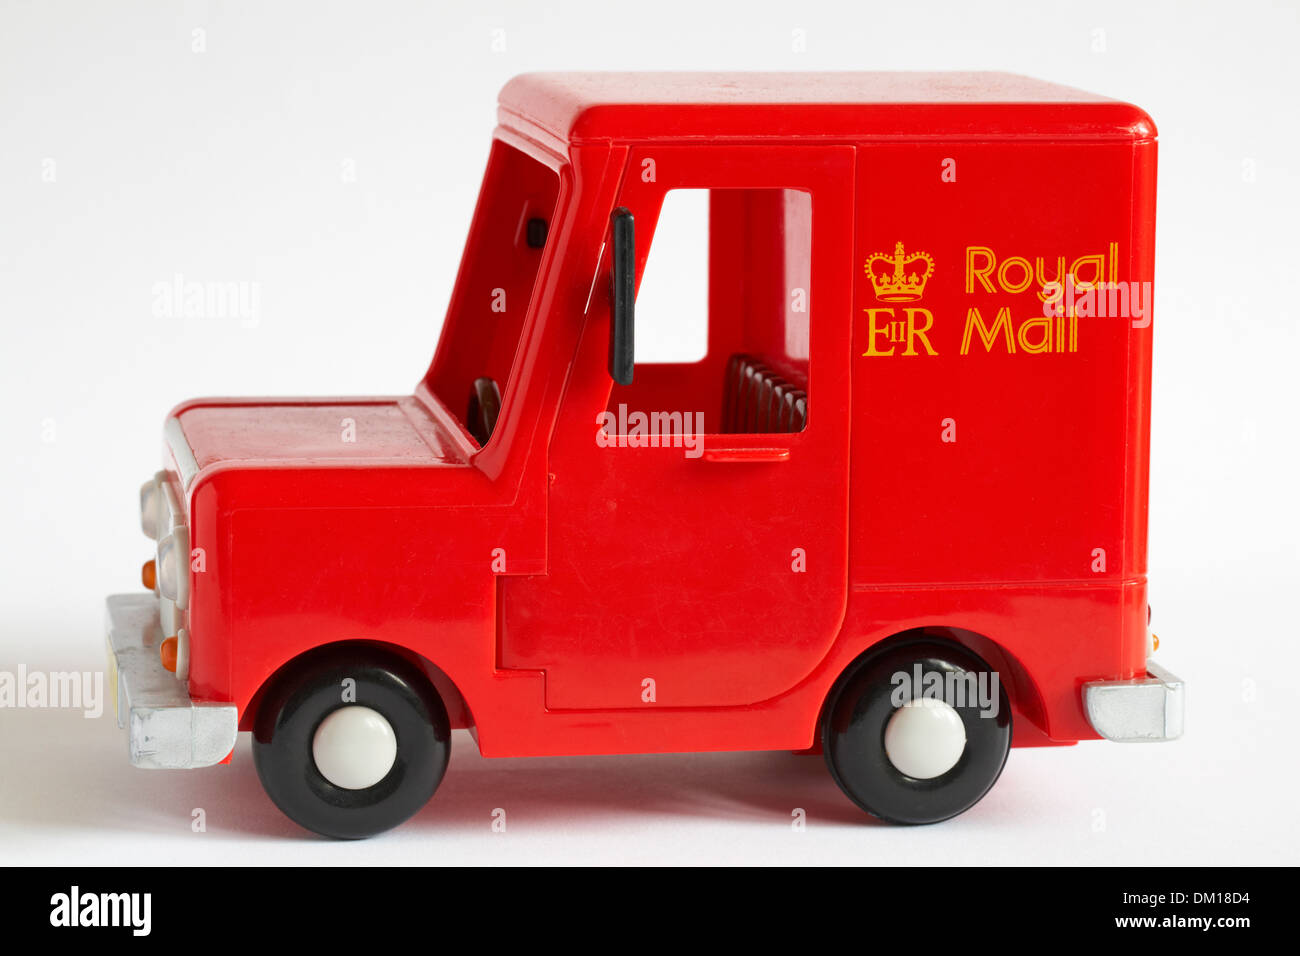 ER Royal Mail van plastic toy car 